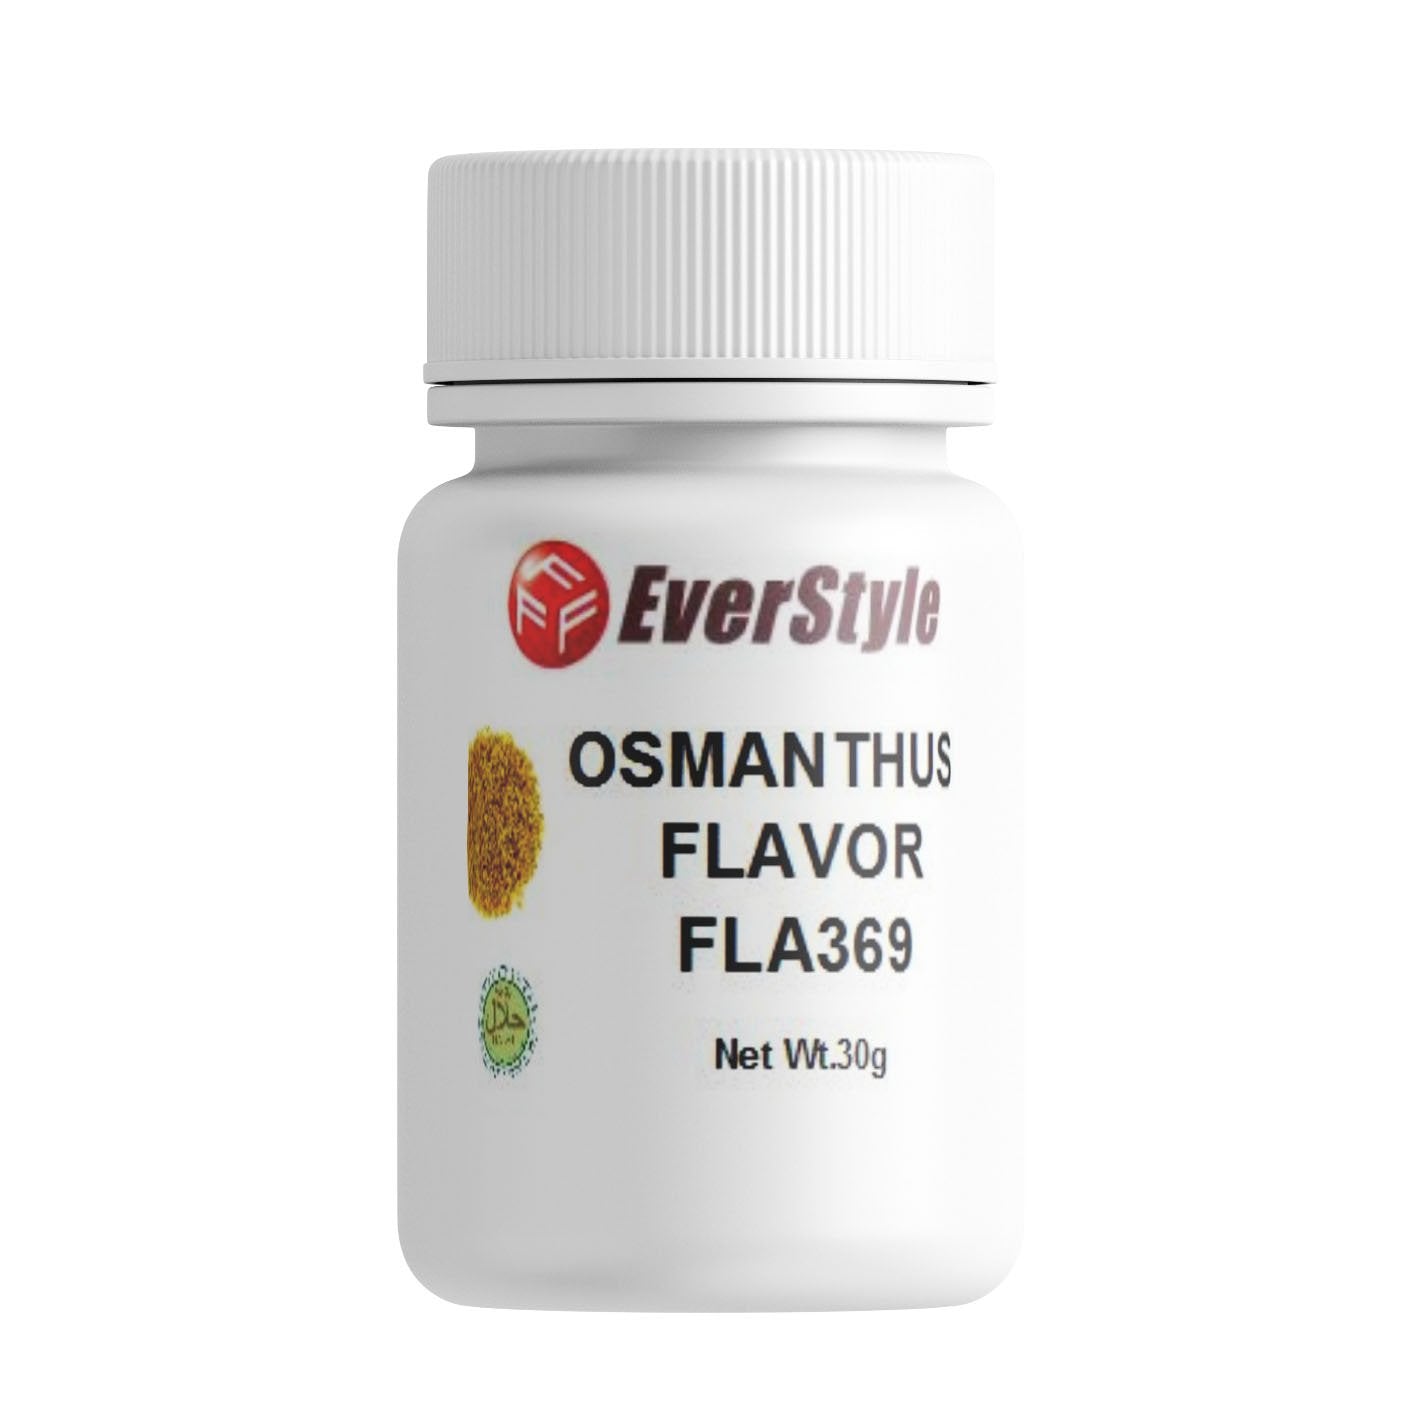 Everstyle Osmanthus Flavor 30g (FLA369)